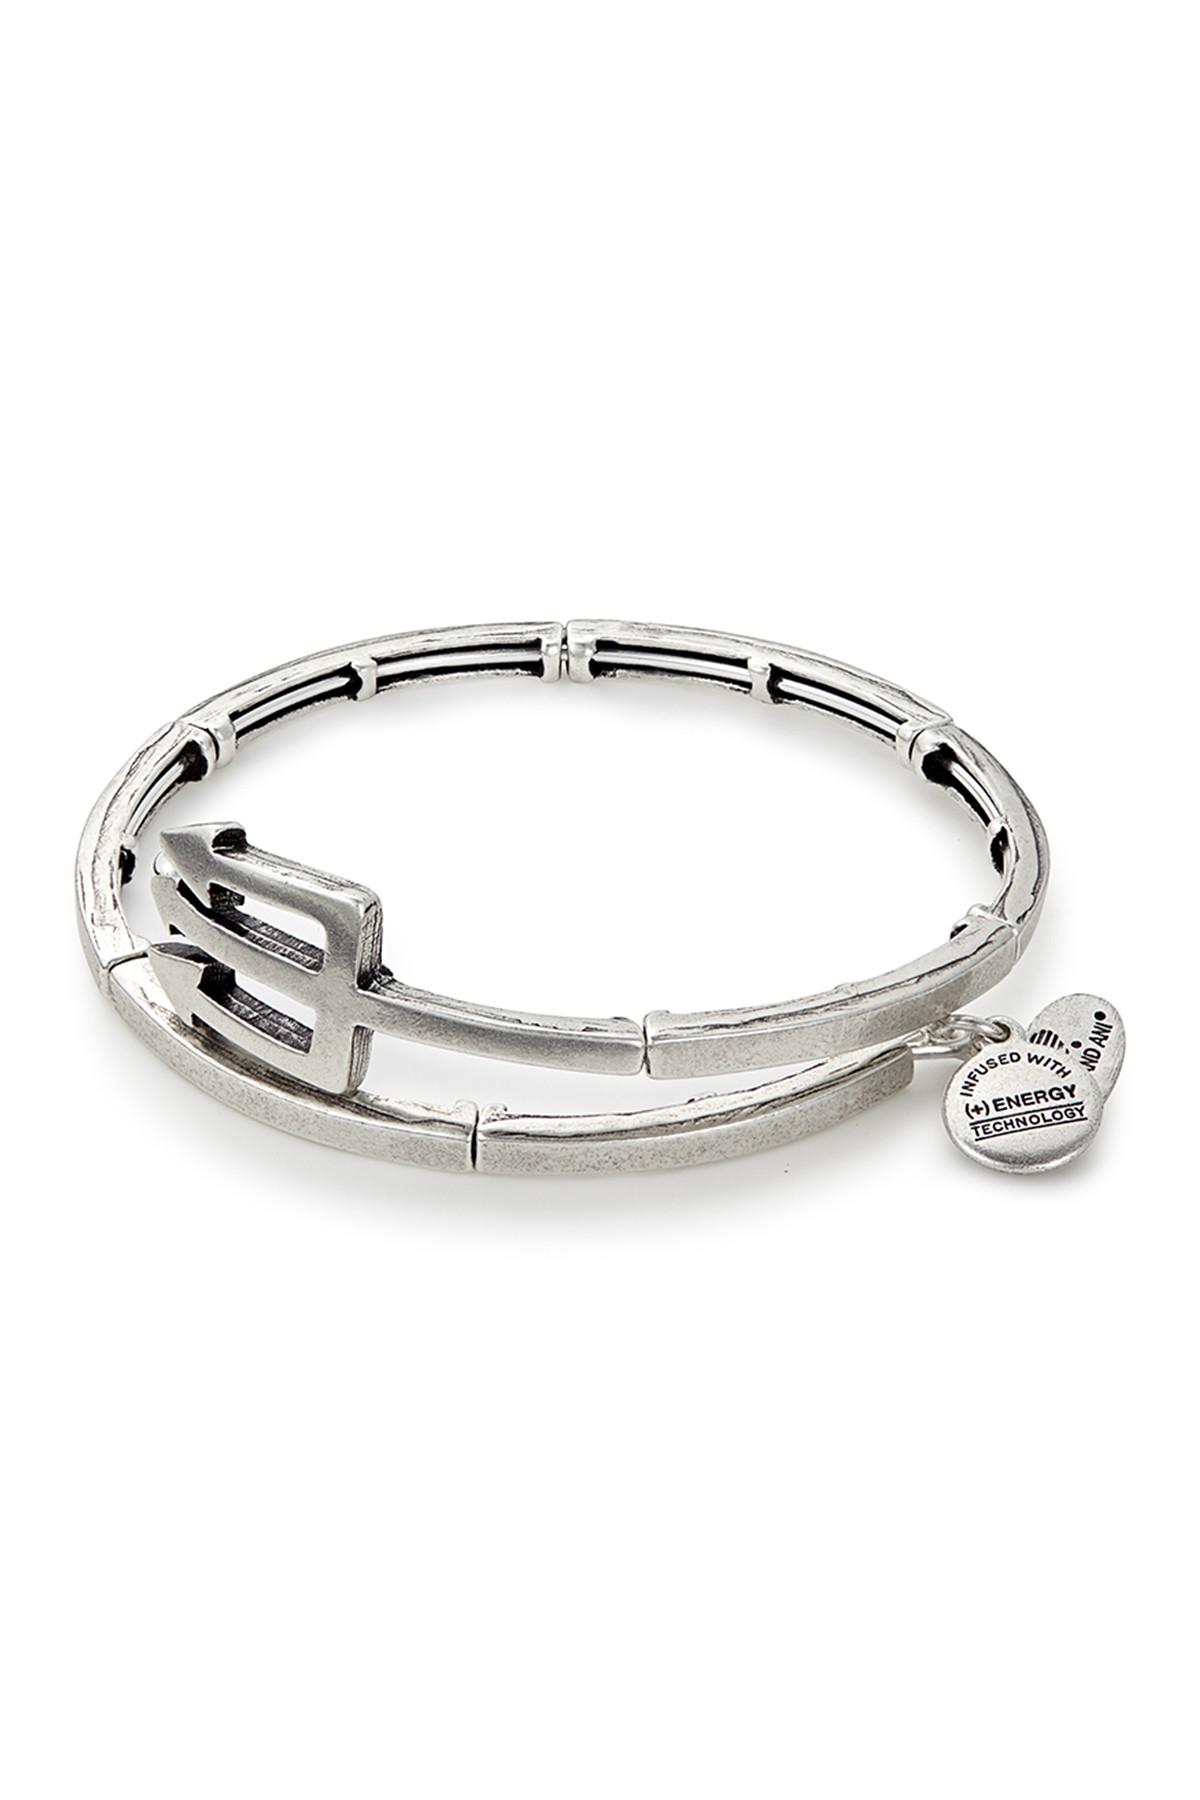 ALEX AND ANI Trident Wrap Bracelet in Silver (Metallic) - Lyst